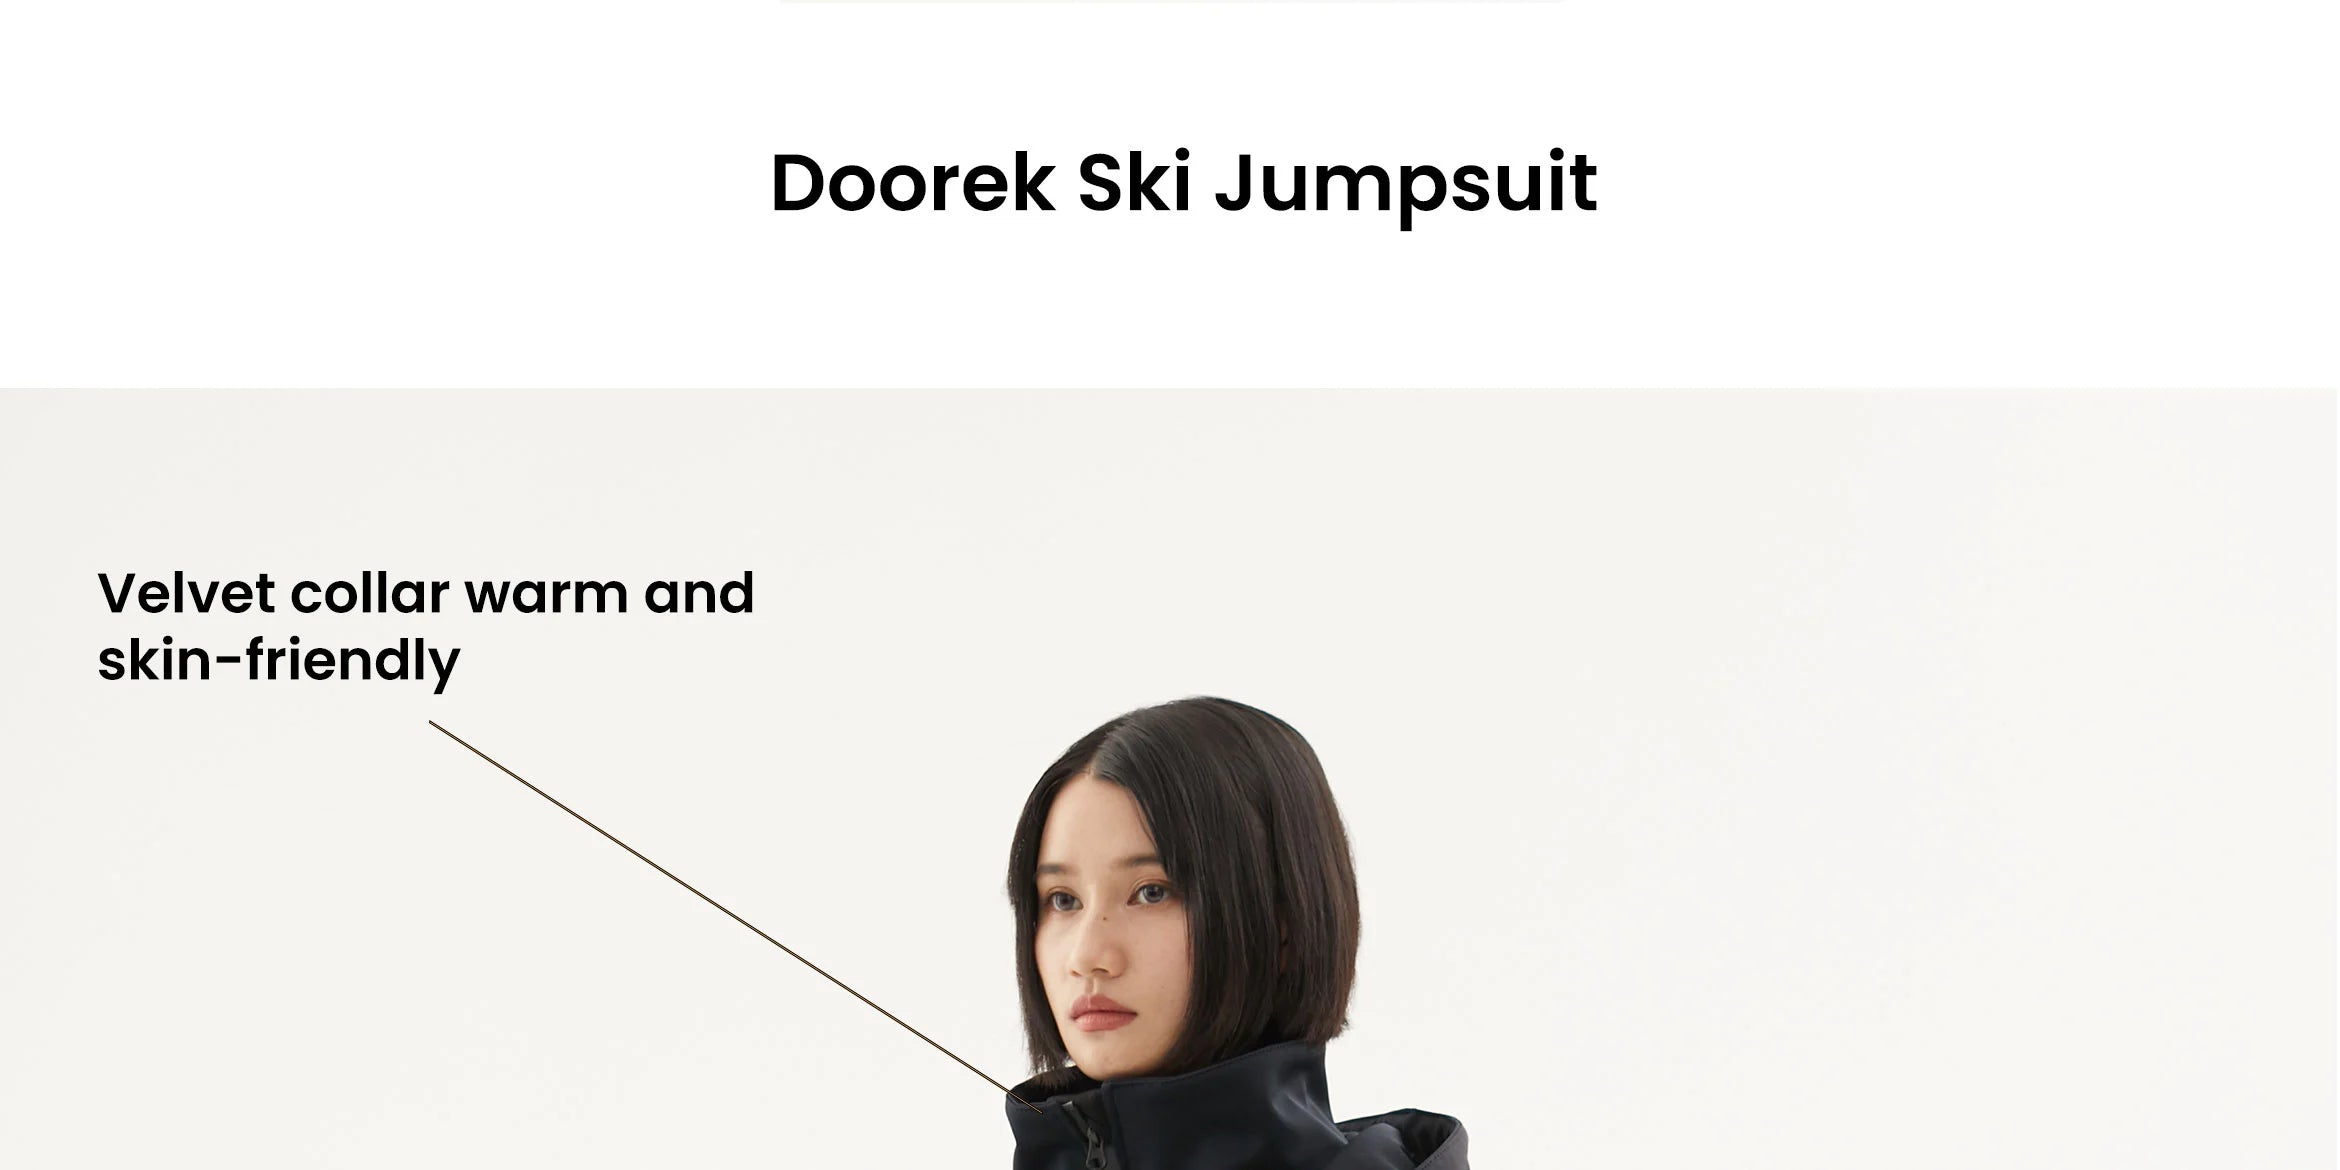 1. Doorek Ski Jumpsuit - Velvet collar